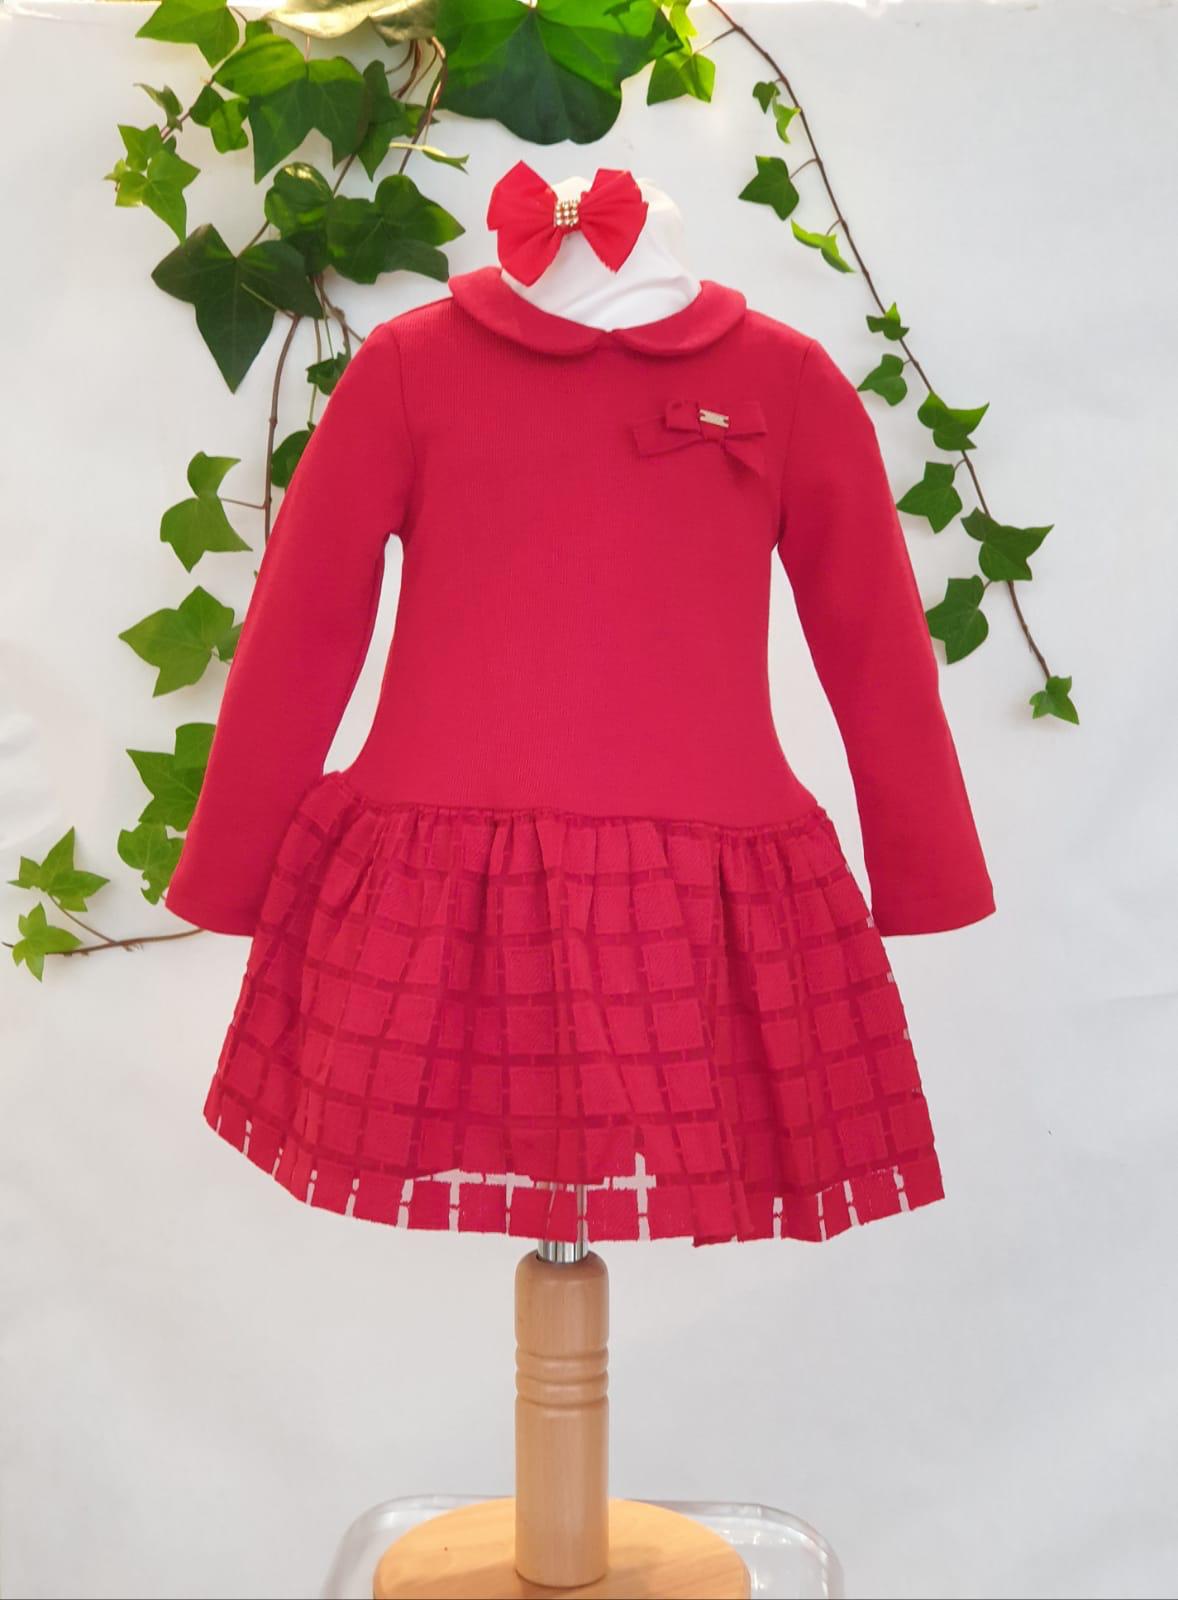 Layette fille robe rouge Mayoral 31 euros du 6 mois au 3 ans – Edelweiss  Paris